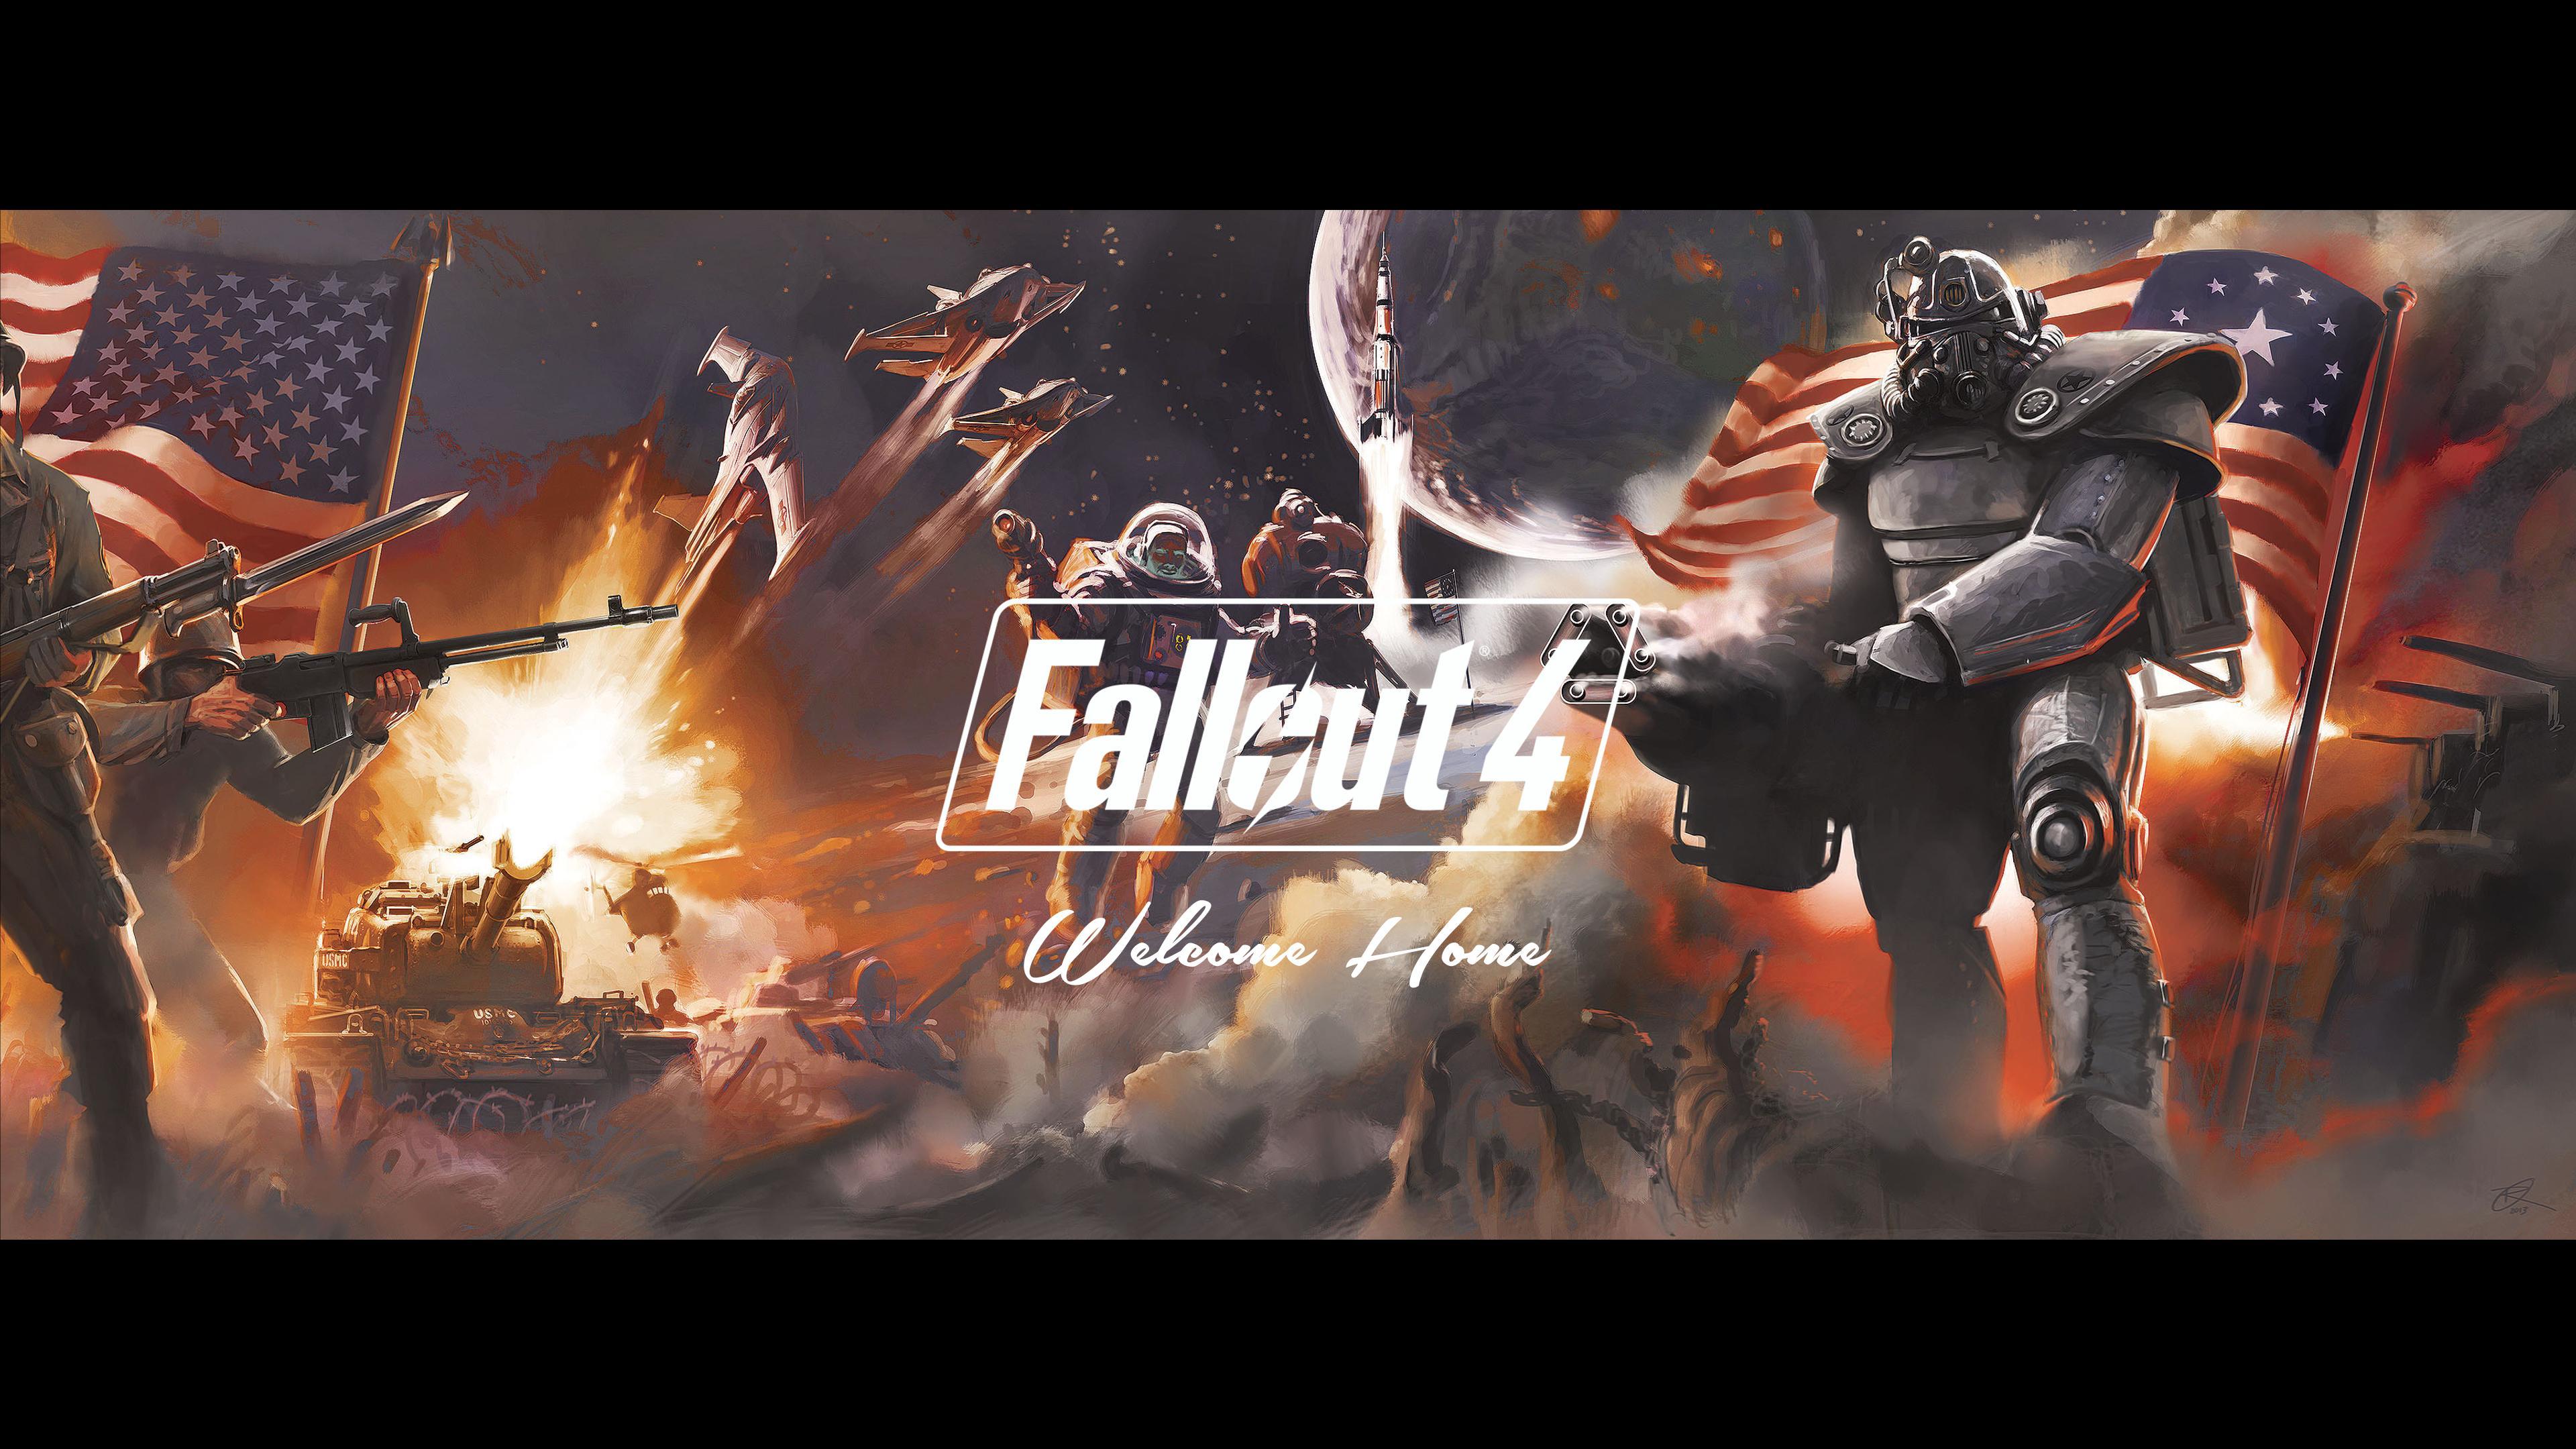 Fallout 4 wallpaper (desktop)